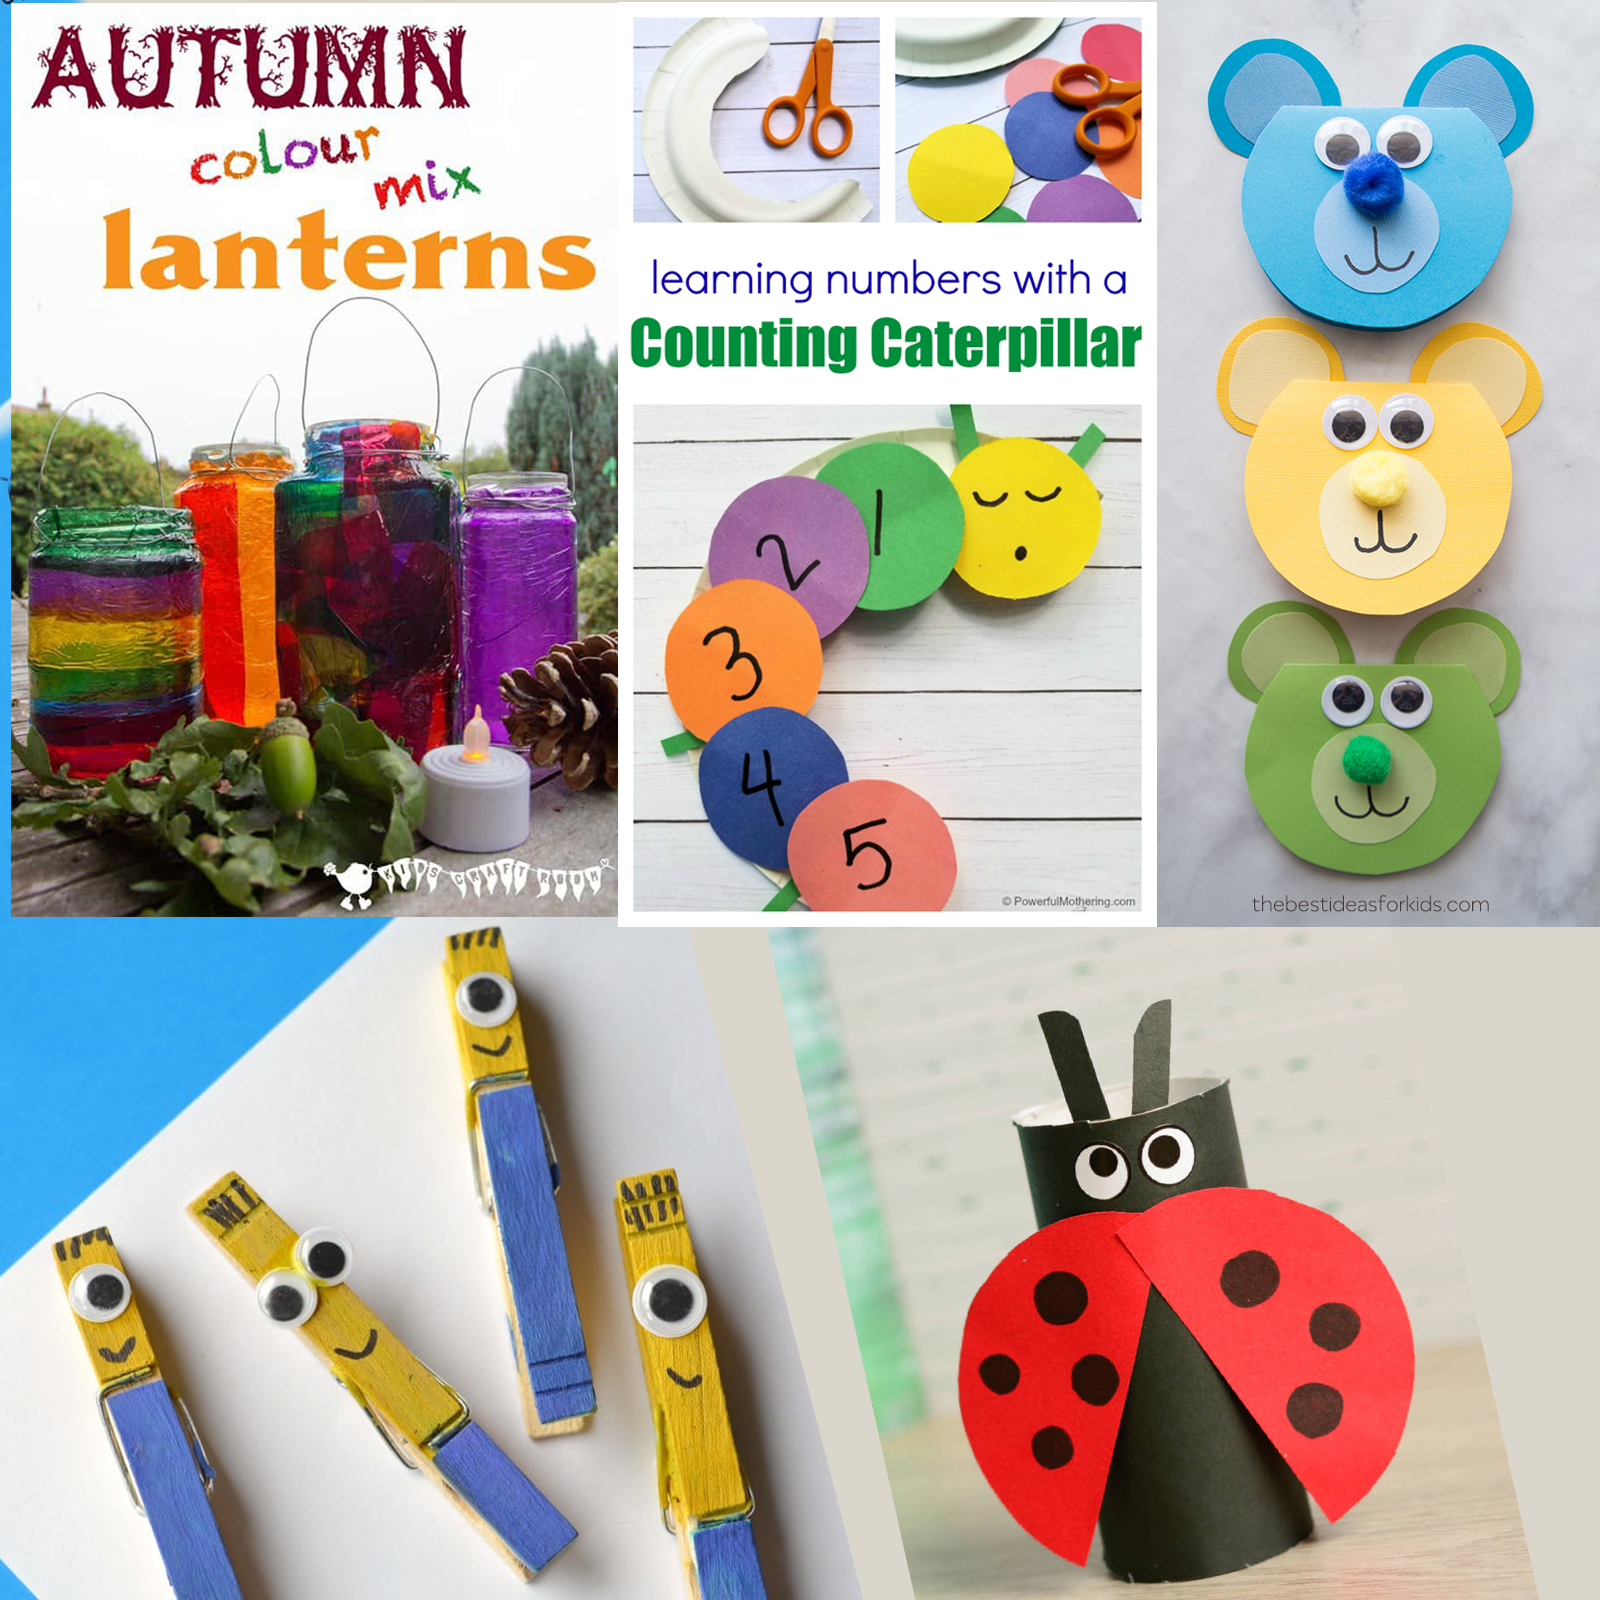 five-fun-crafts-for-autumn